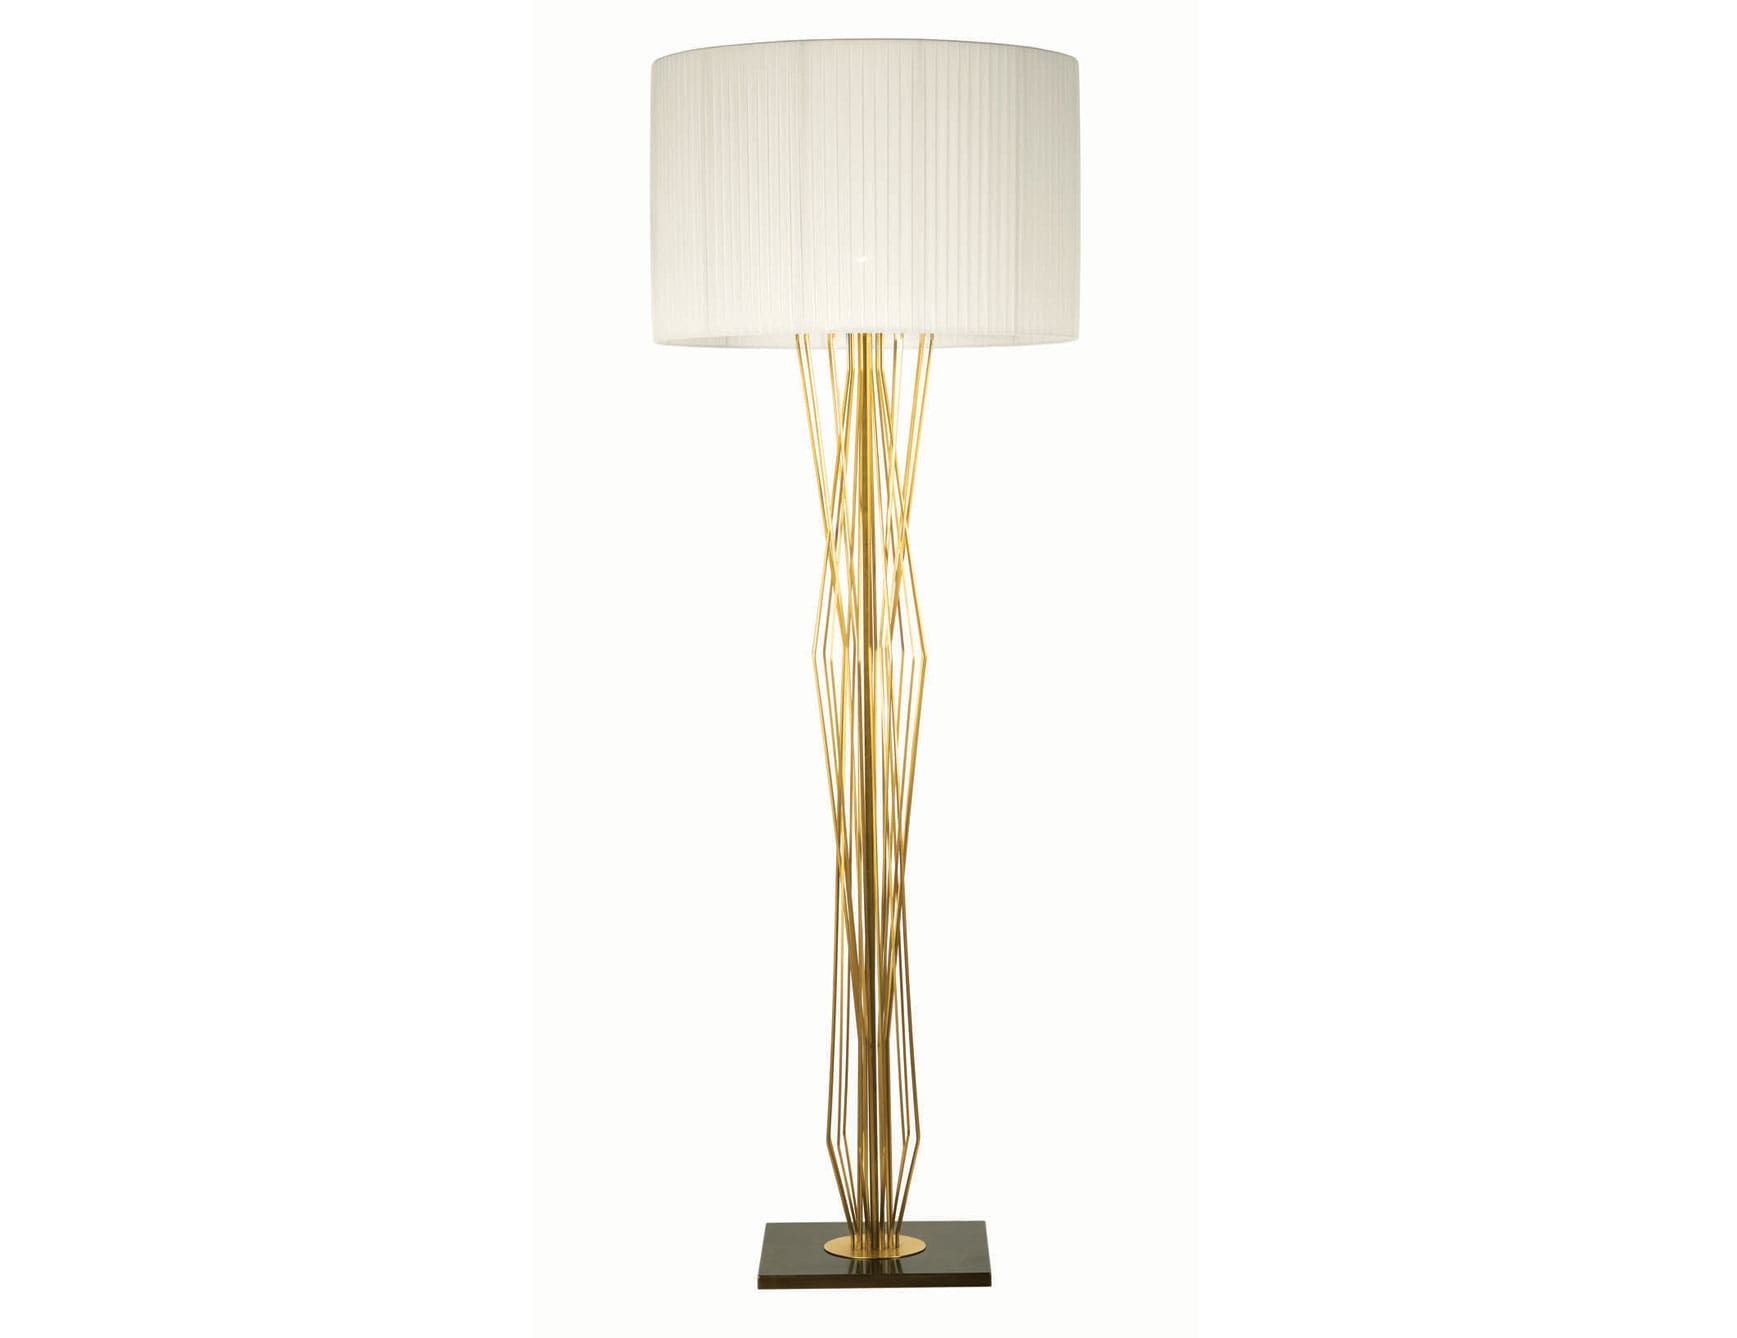 Saba modern Italian floor lamp with ivory metal